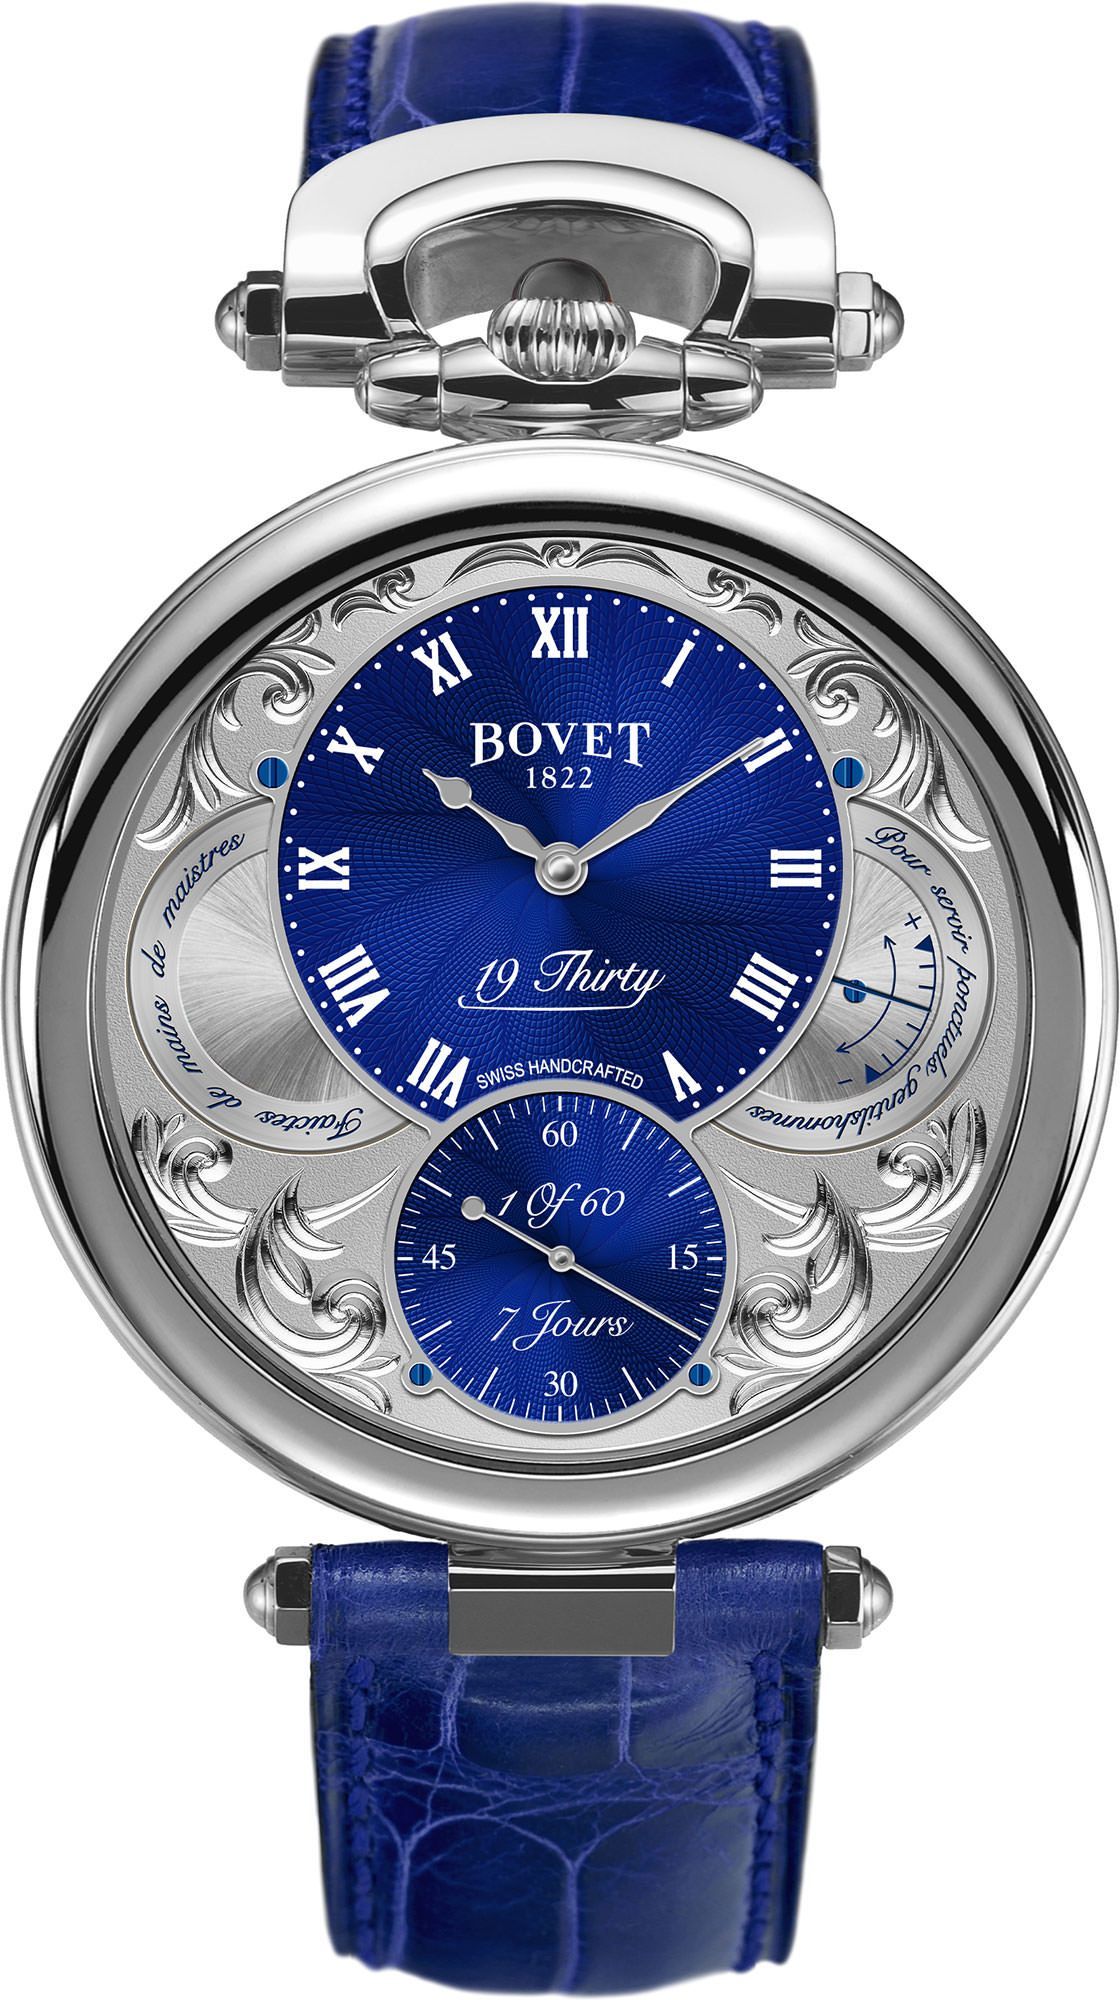 Bovet Fleurier 19Thirty Great Guilloché Blue Dial 42 mm Manual Winding Watch For Men - 1